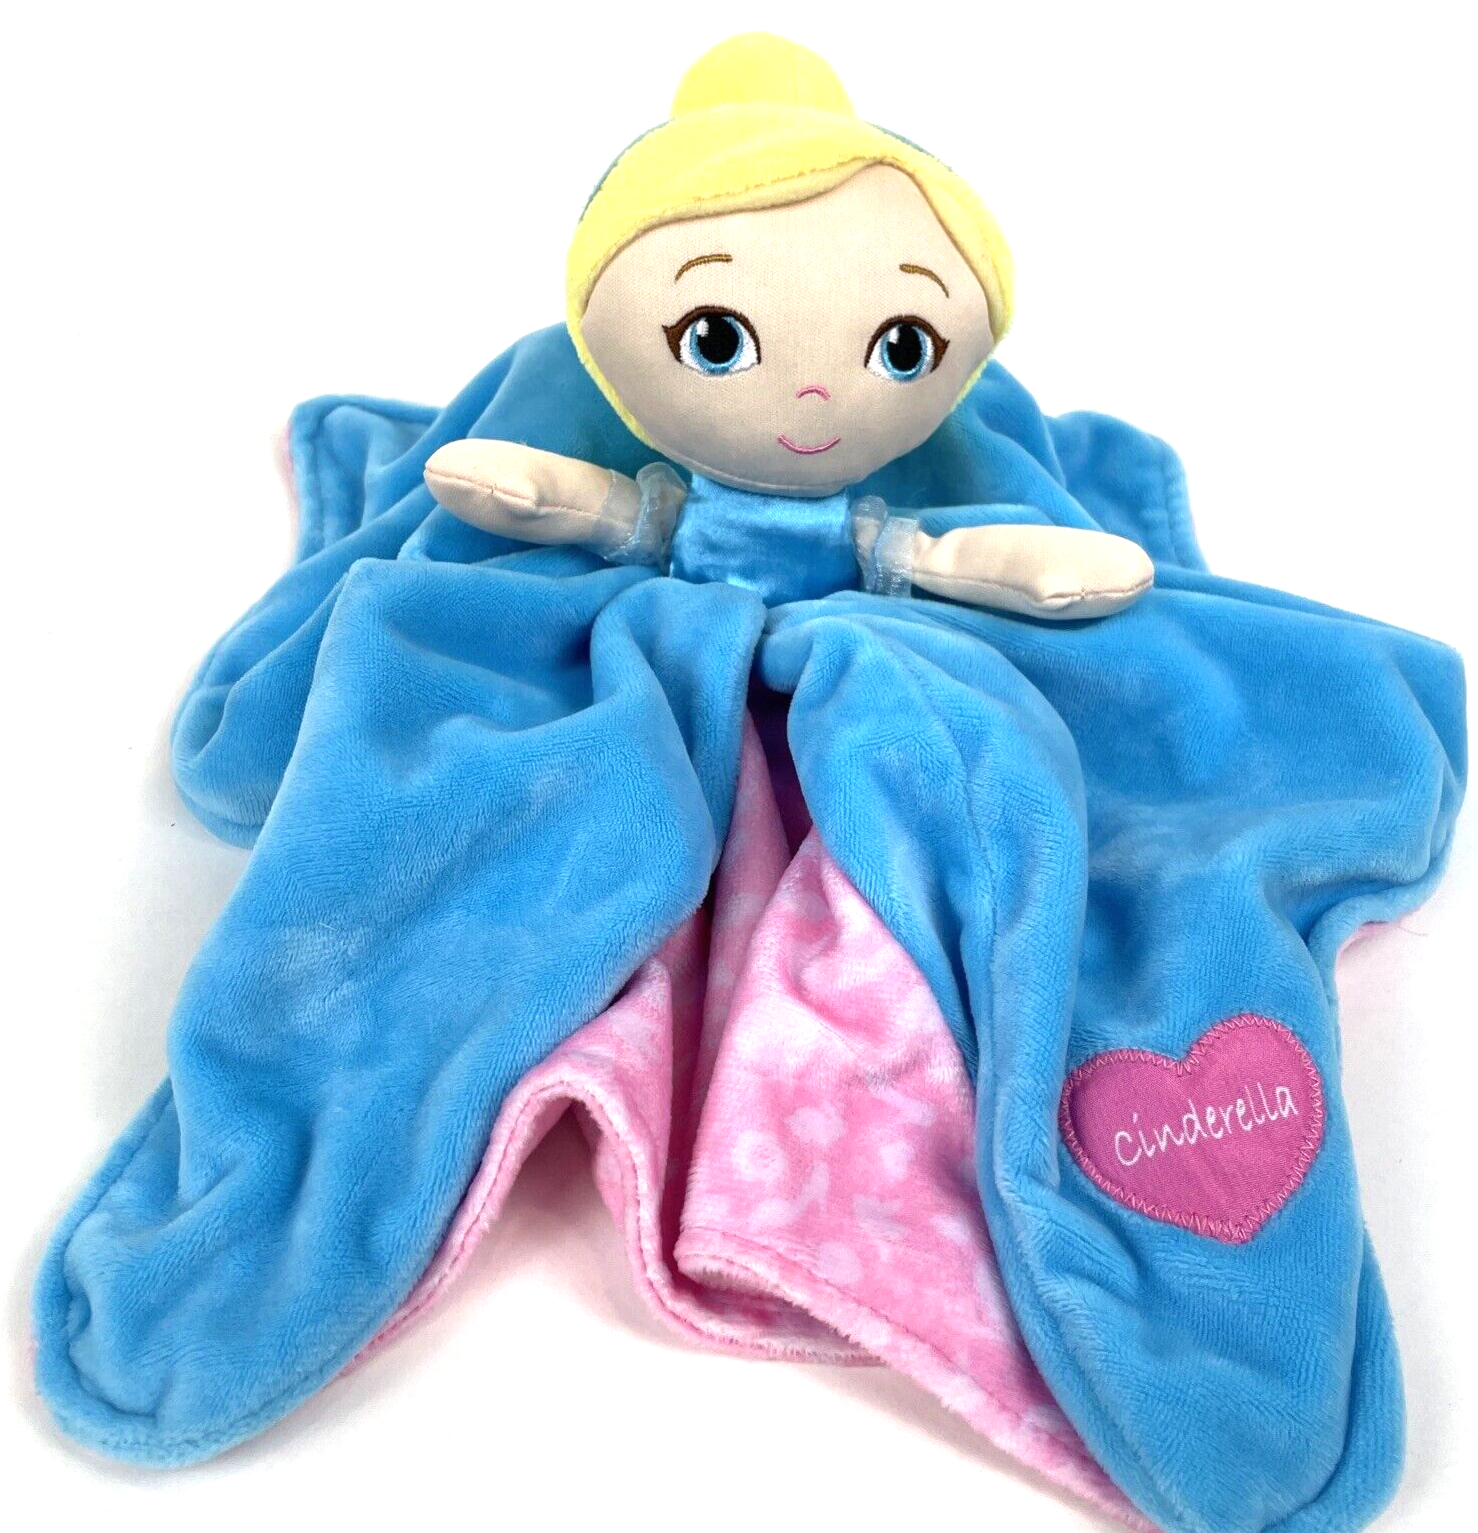 Disney Baby Blankie Cinderella Lovey Security Blanket 13" Blue Pink Dress Doll - $32.00